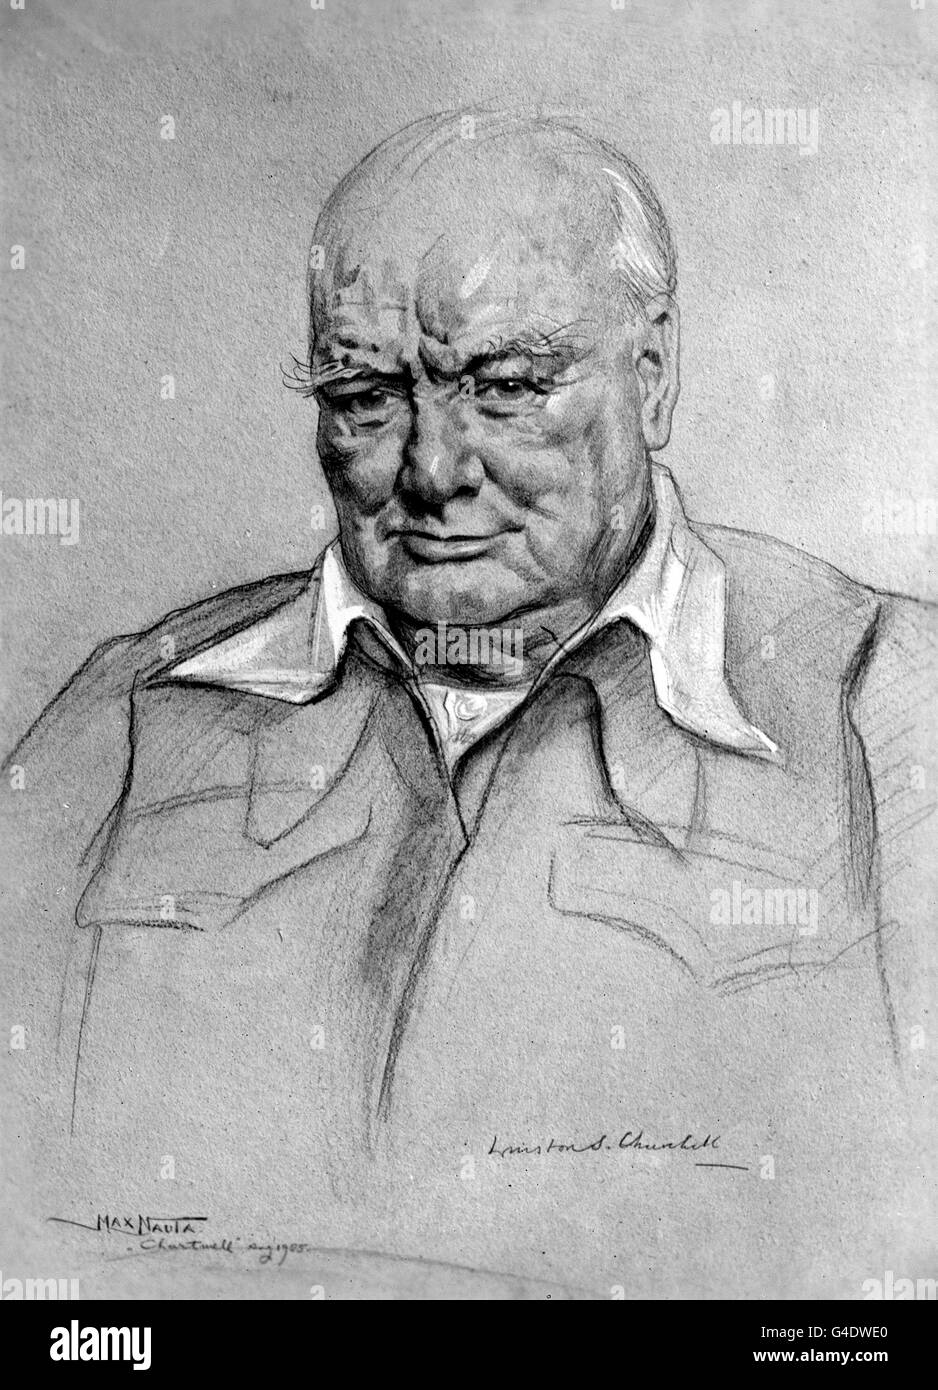 Art - Max Nauta - Sir Winston Churchill Stock Photo - Alamy